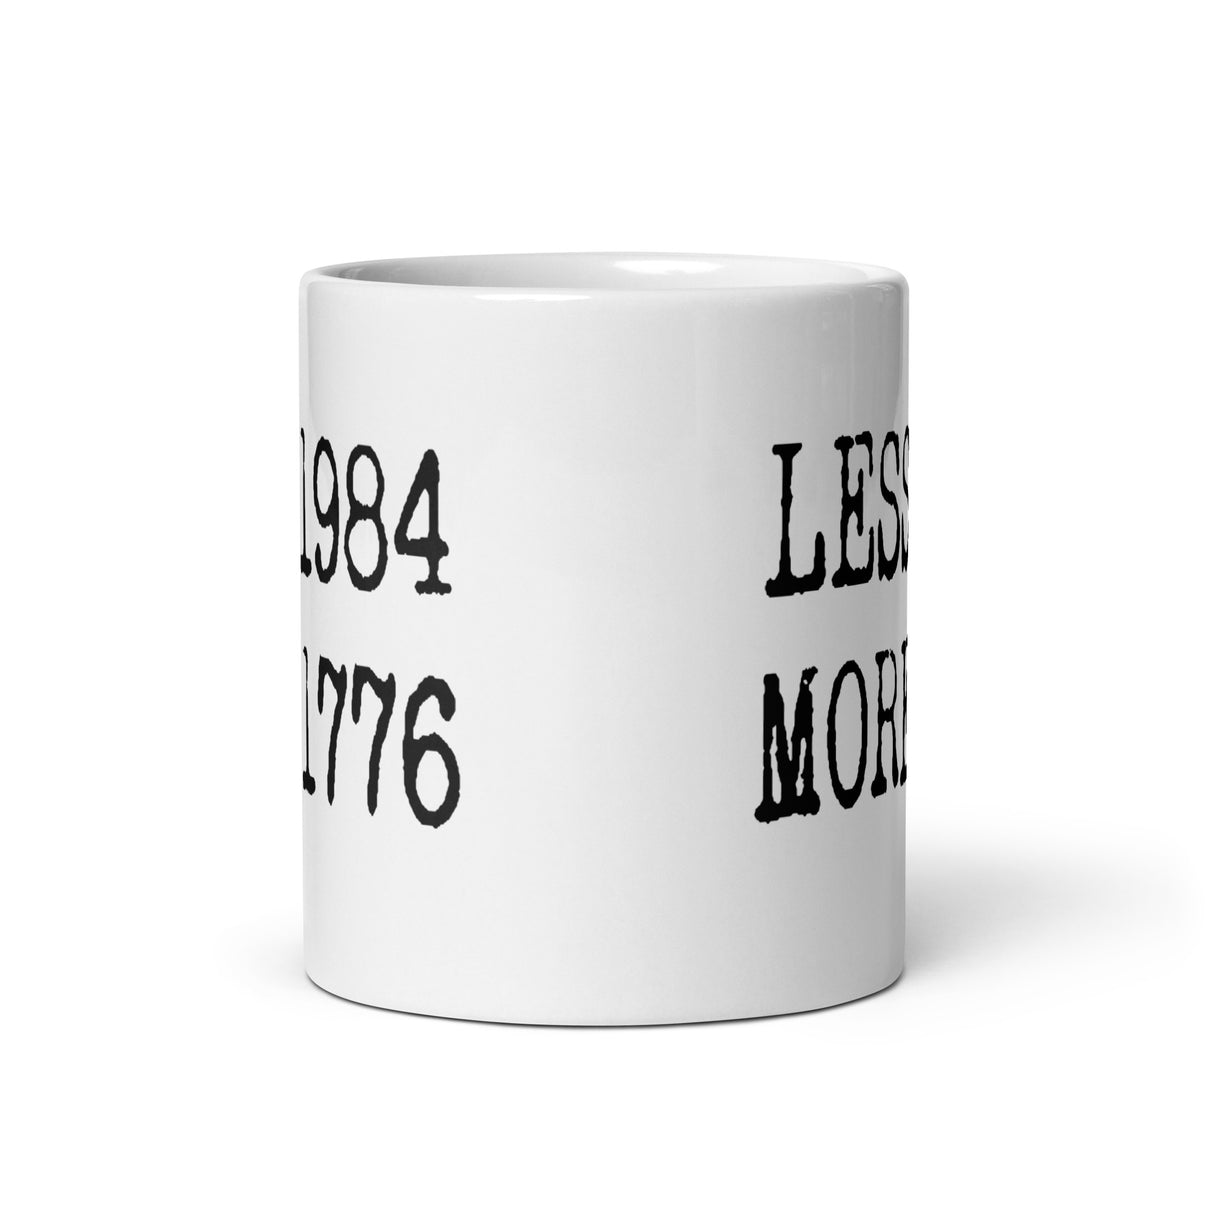 Less 1984 More 1776 Coffee Mug - Libertarian Country